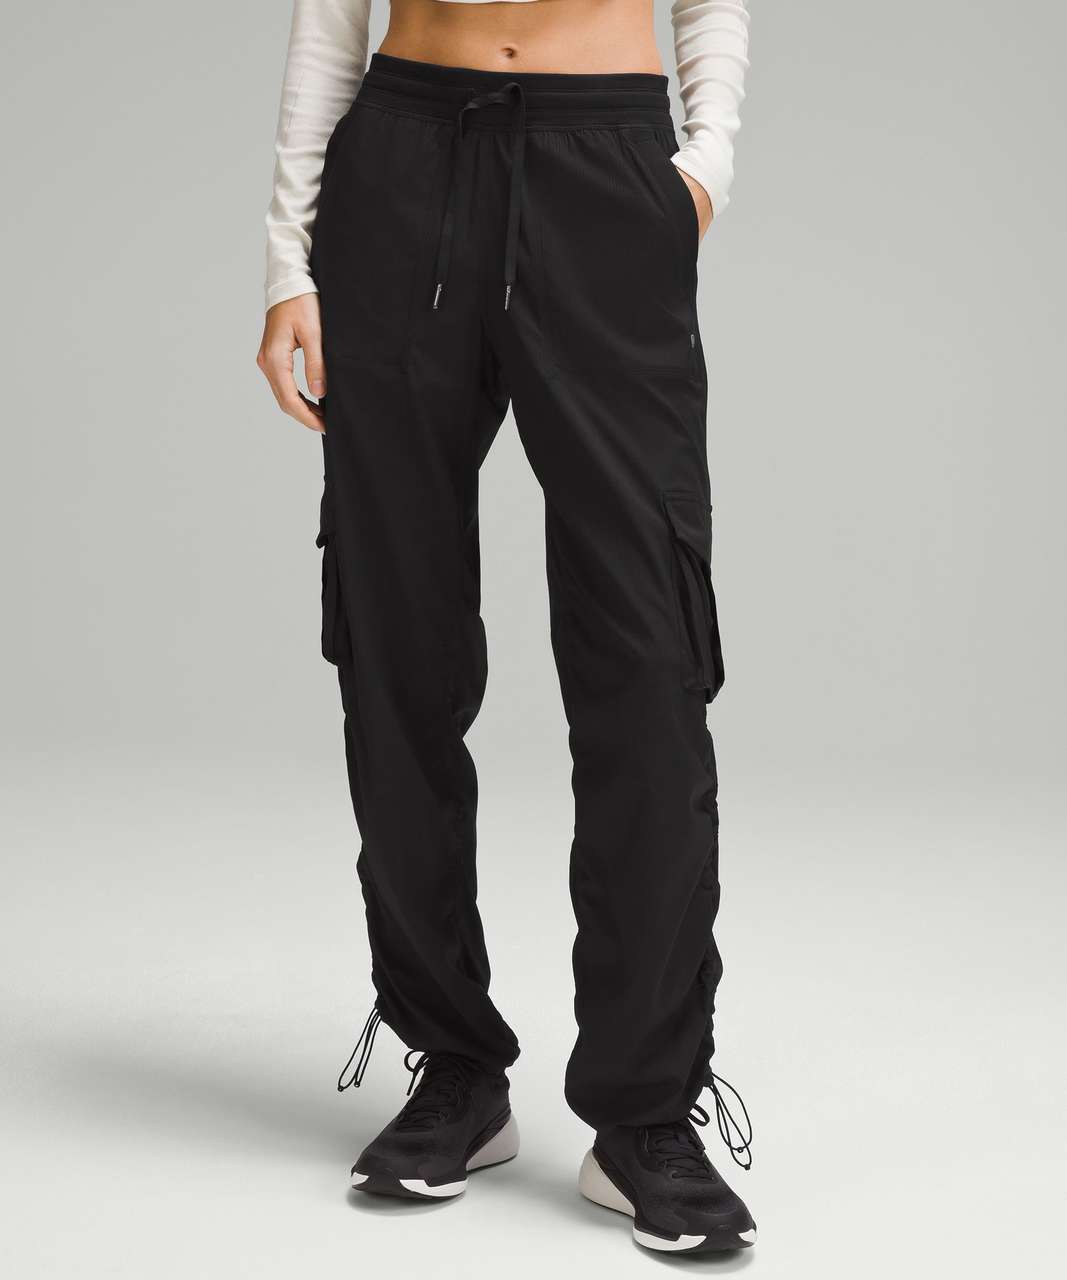 Lululemon Dance Studio Pants Black Size 4 - $40 (59% Off Retail